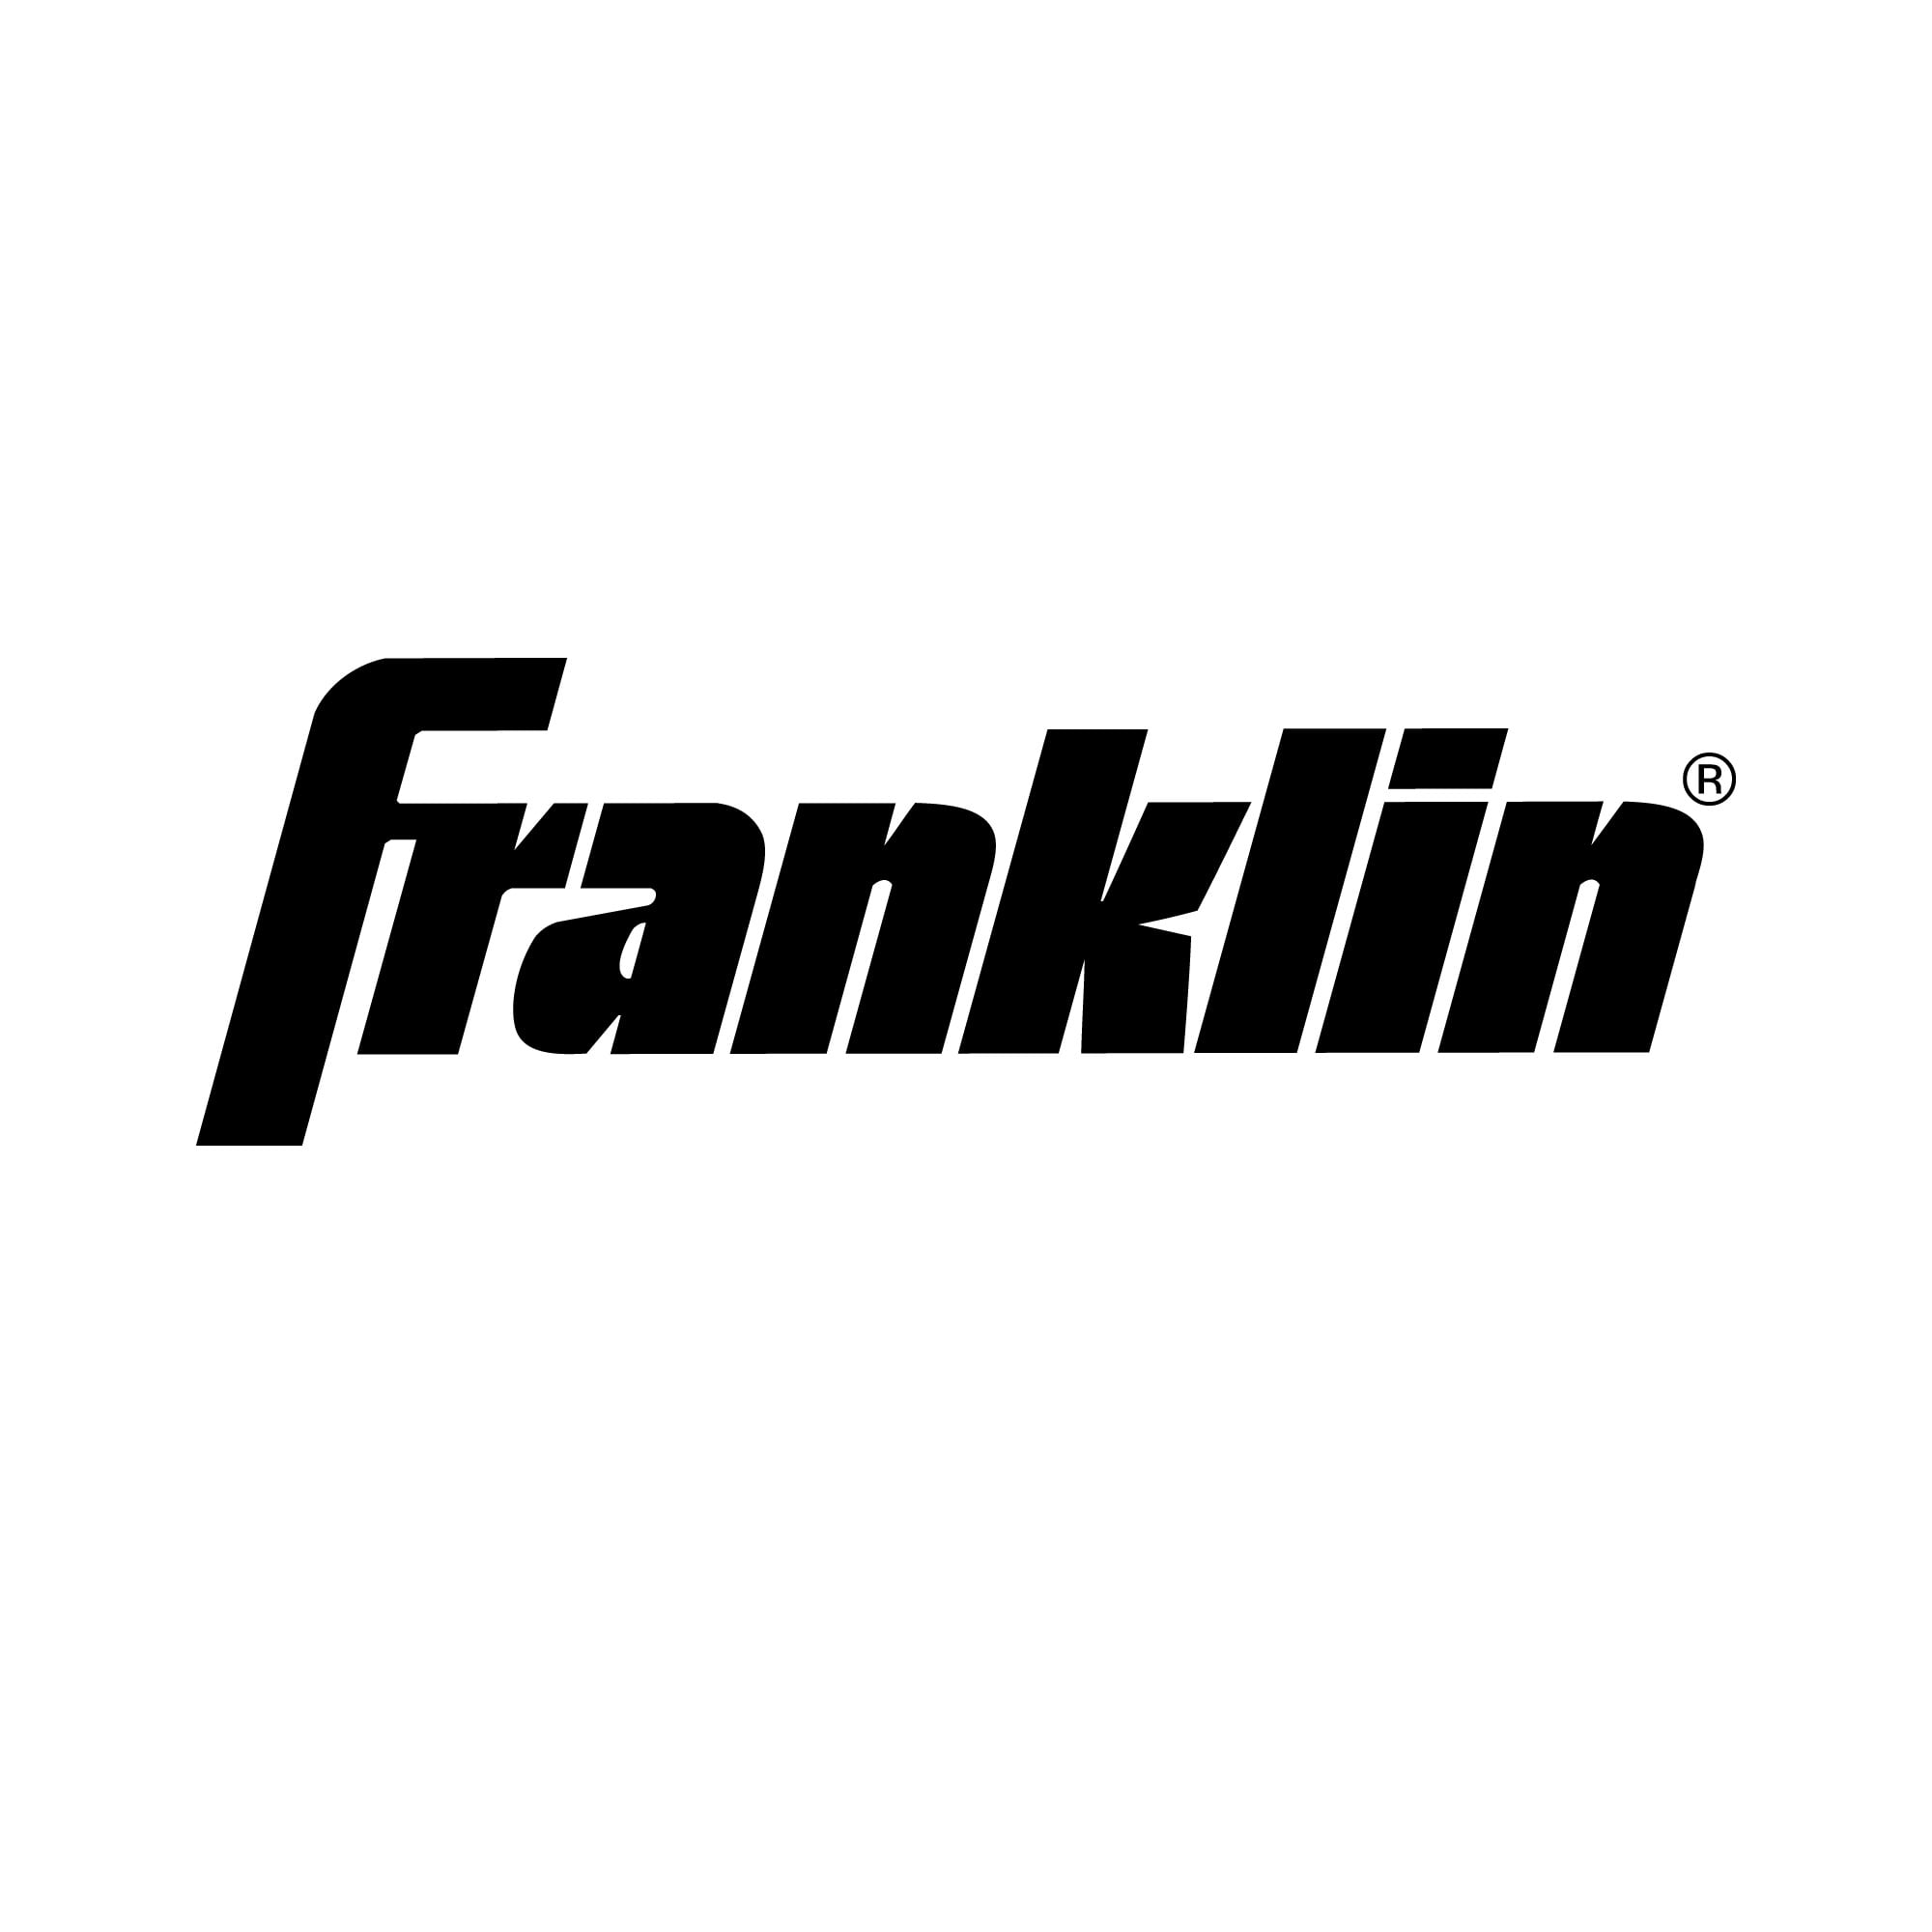 Franklin Sports Pickleball Court Marker Kit 